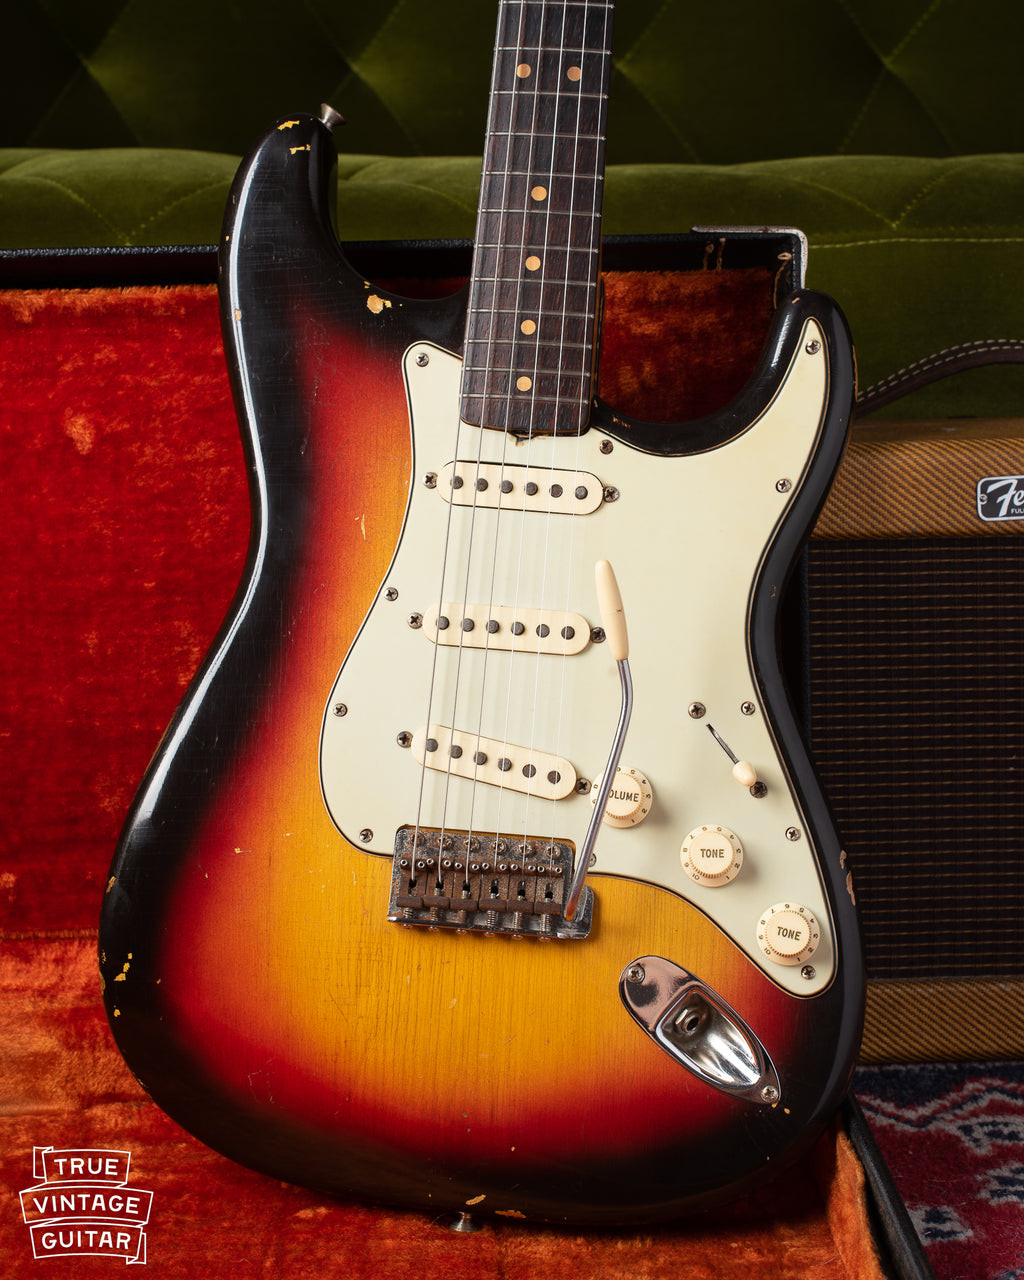 Fender Stratocaster 1963 with Sunburst finish